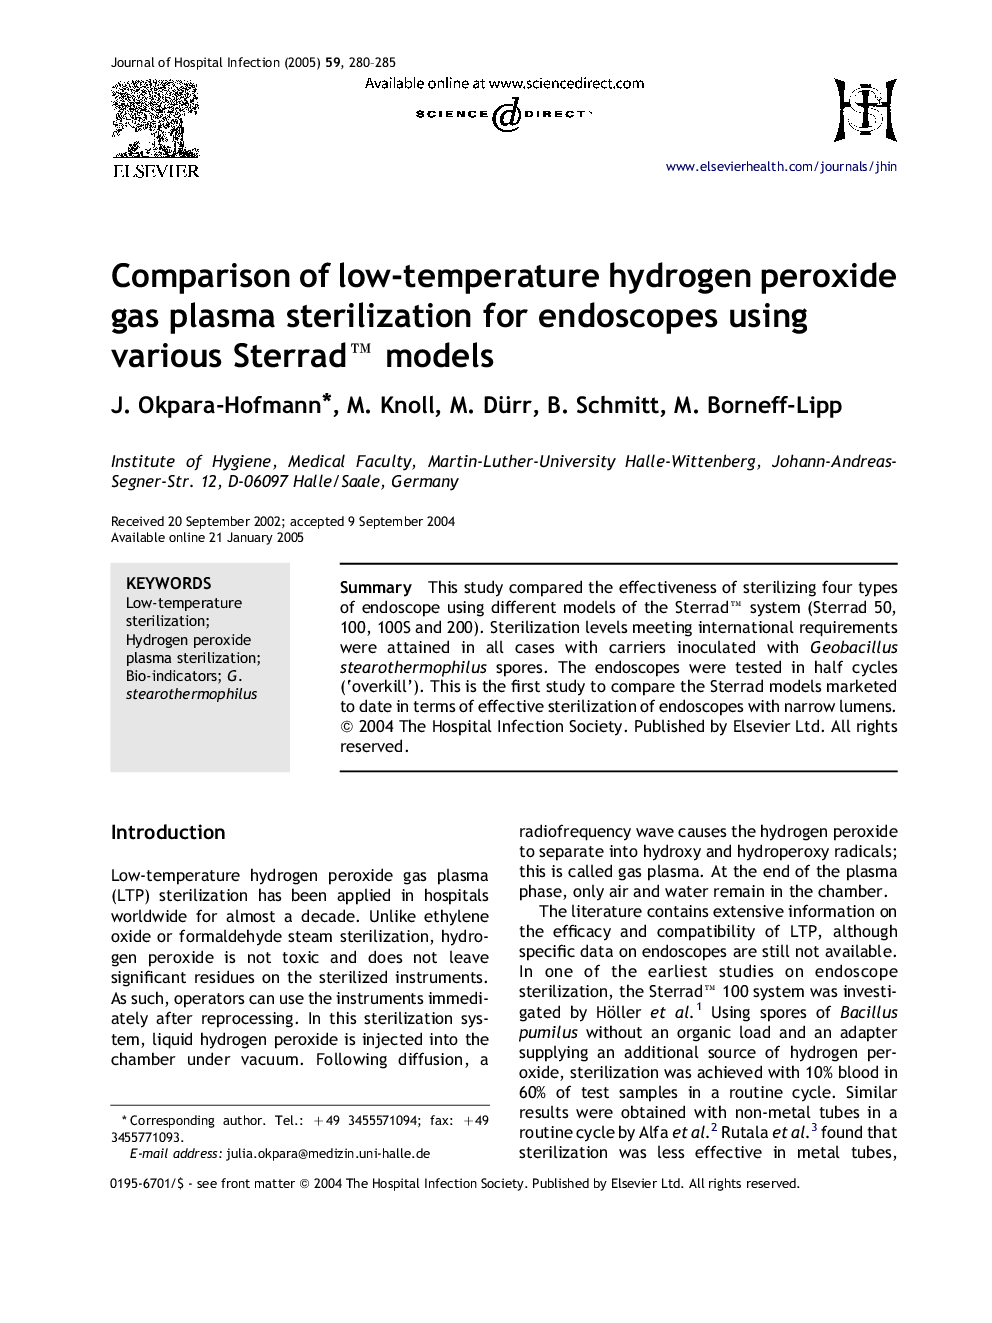 Comparison of low-temperature hydrogen peroxide gas plasma sterilization for endoscopes using various Sterradâ¢ models